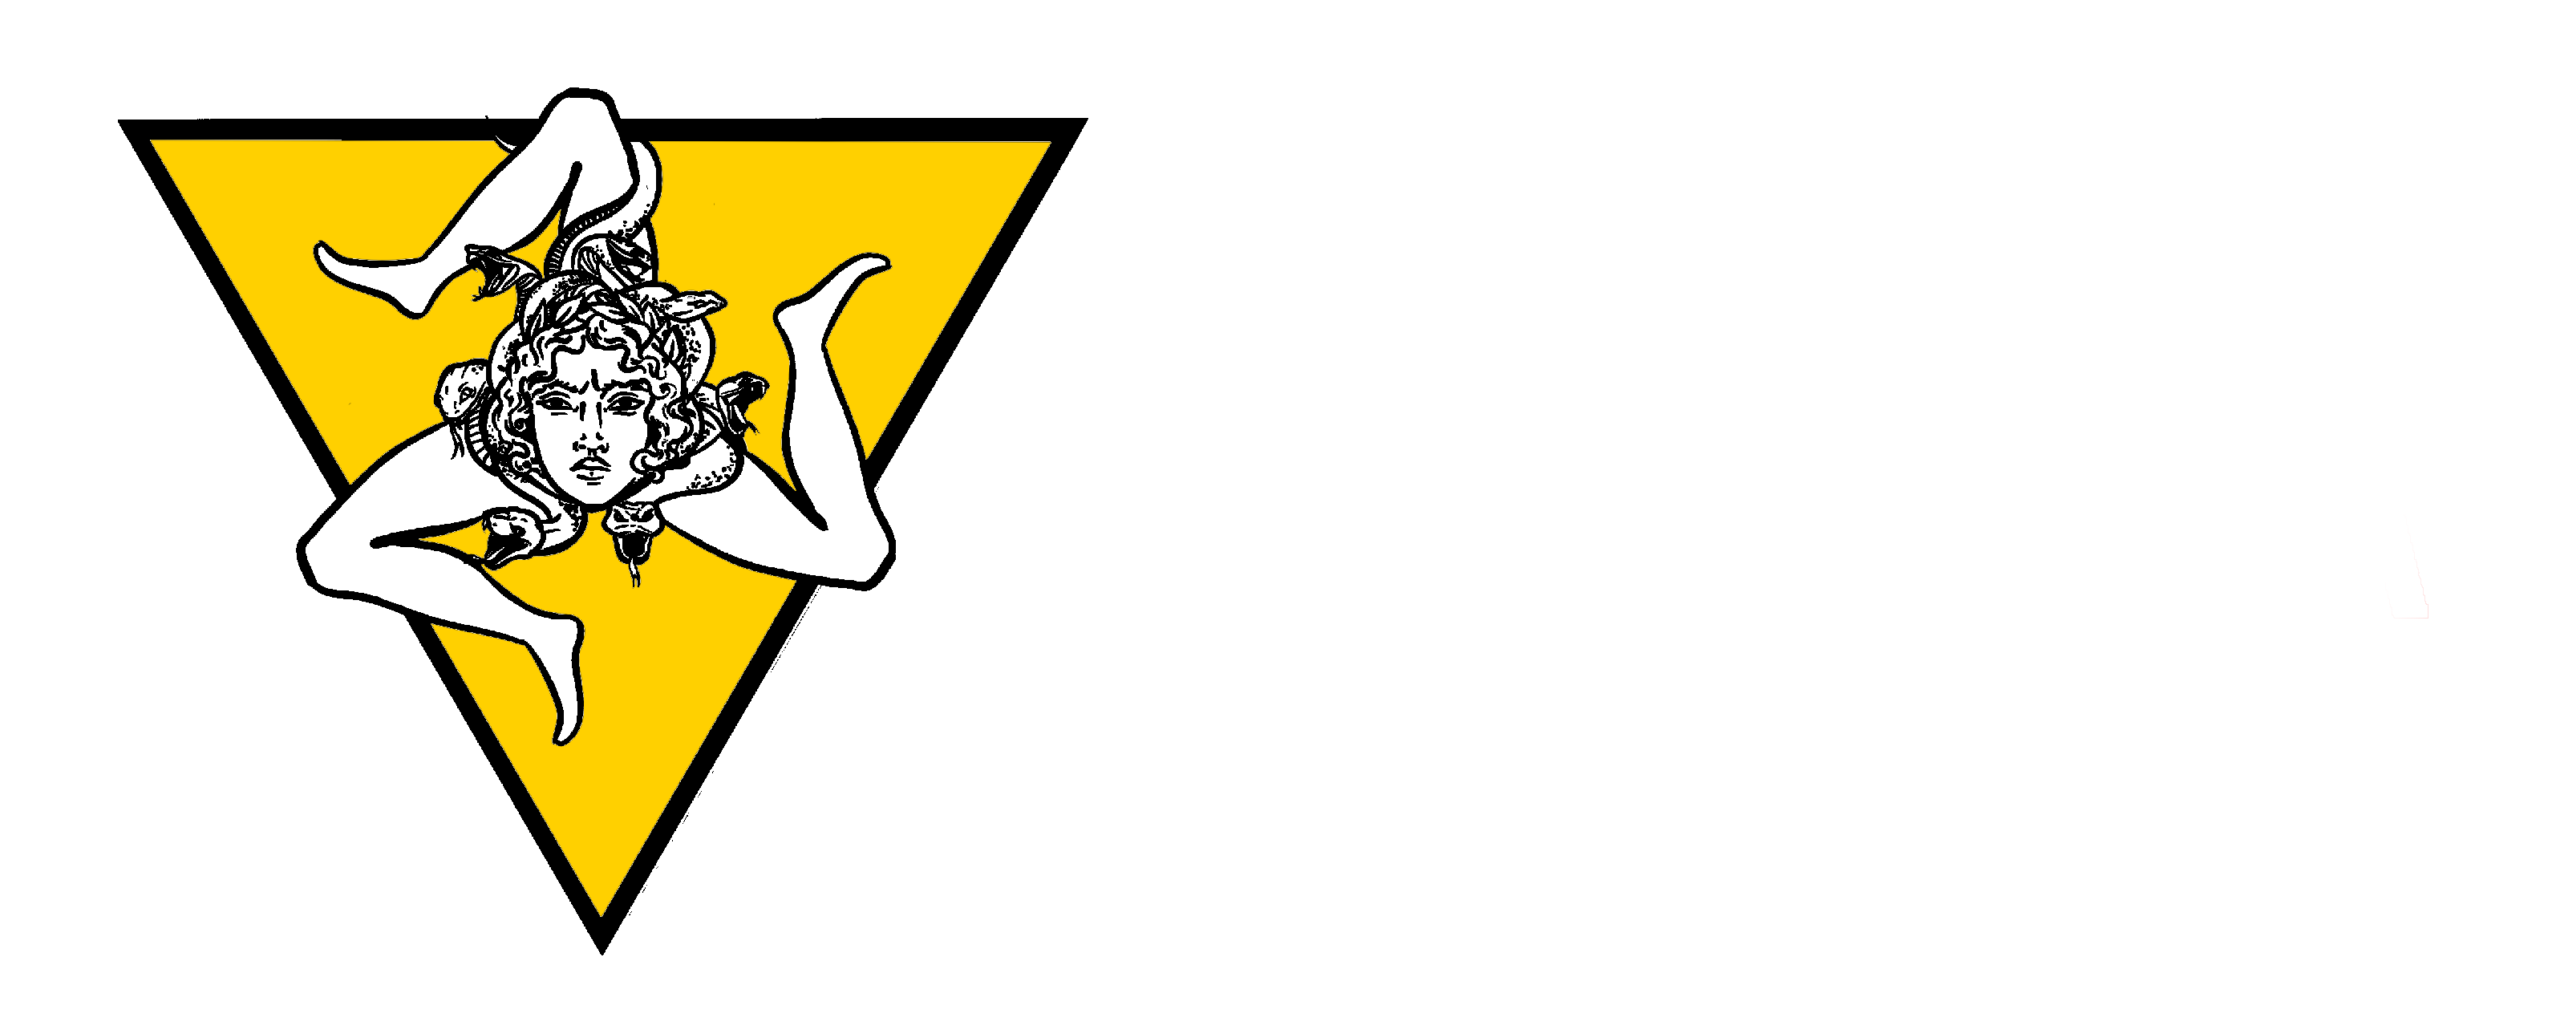 Trinacria.info